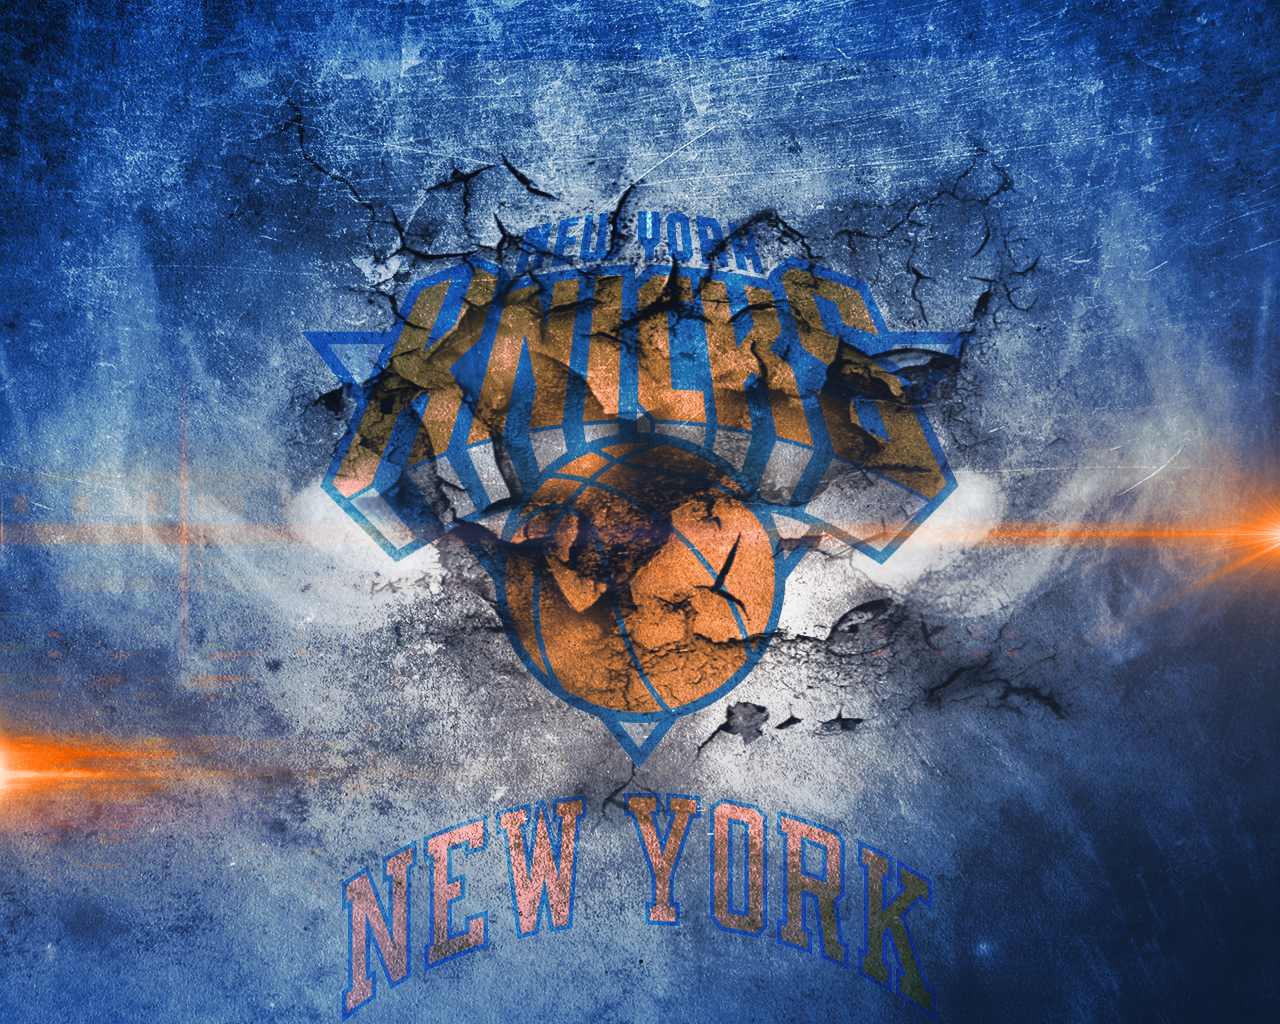 Ny Knicks Wallpaper 2013